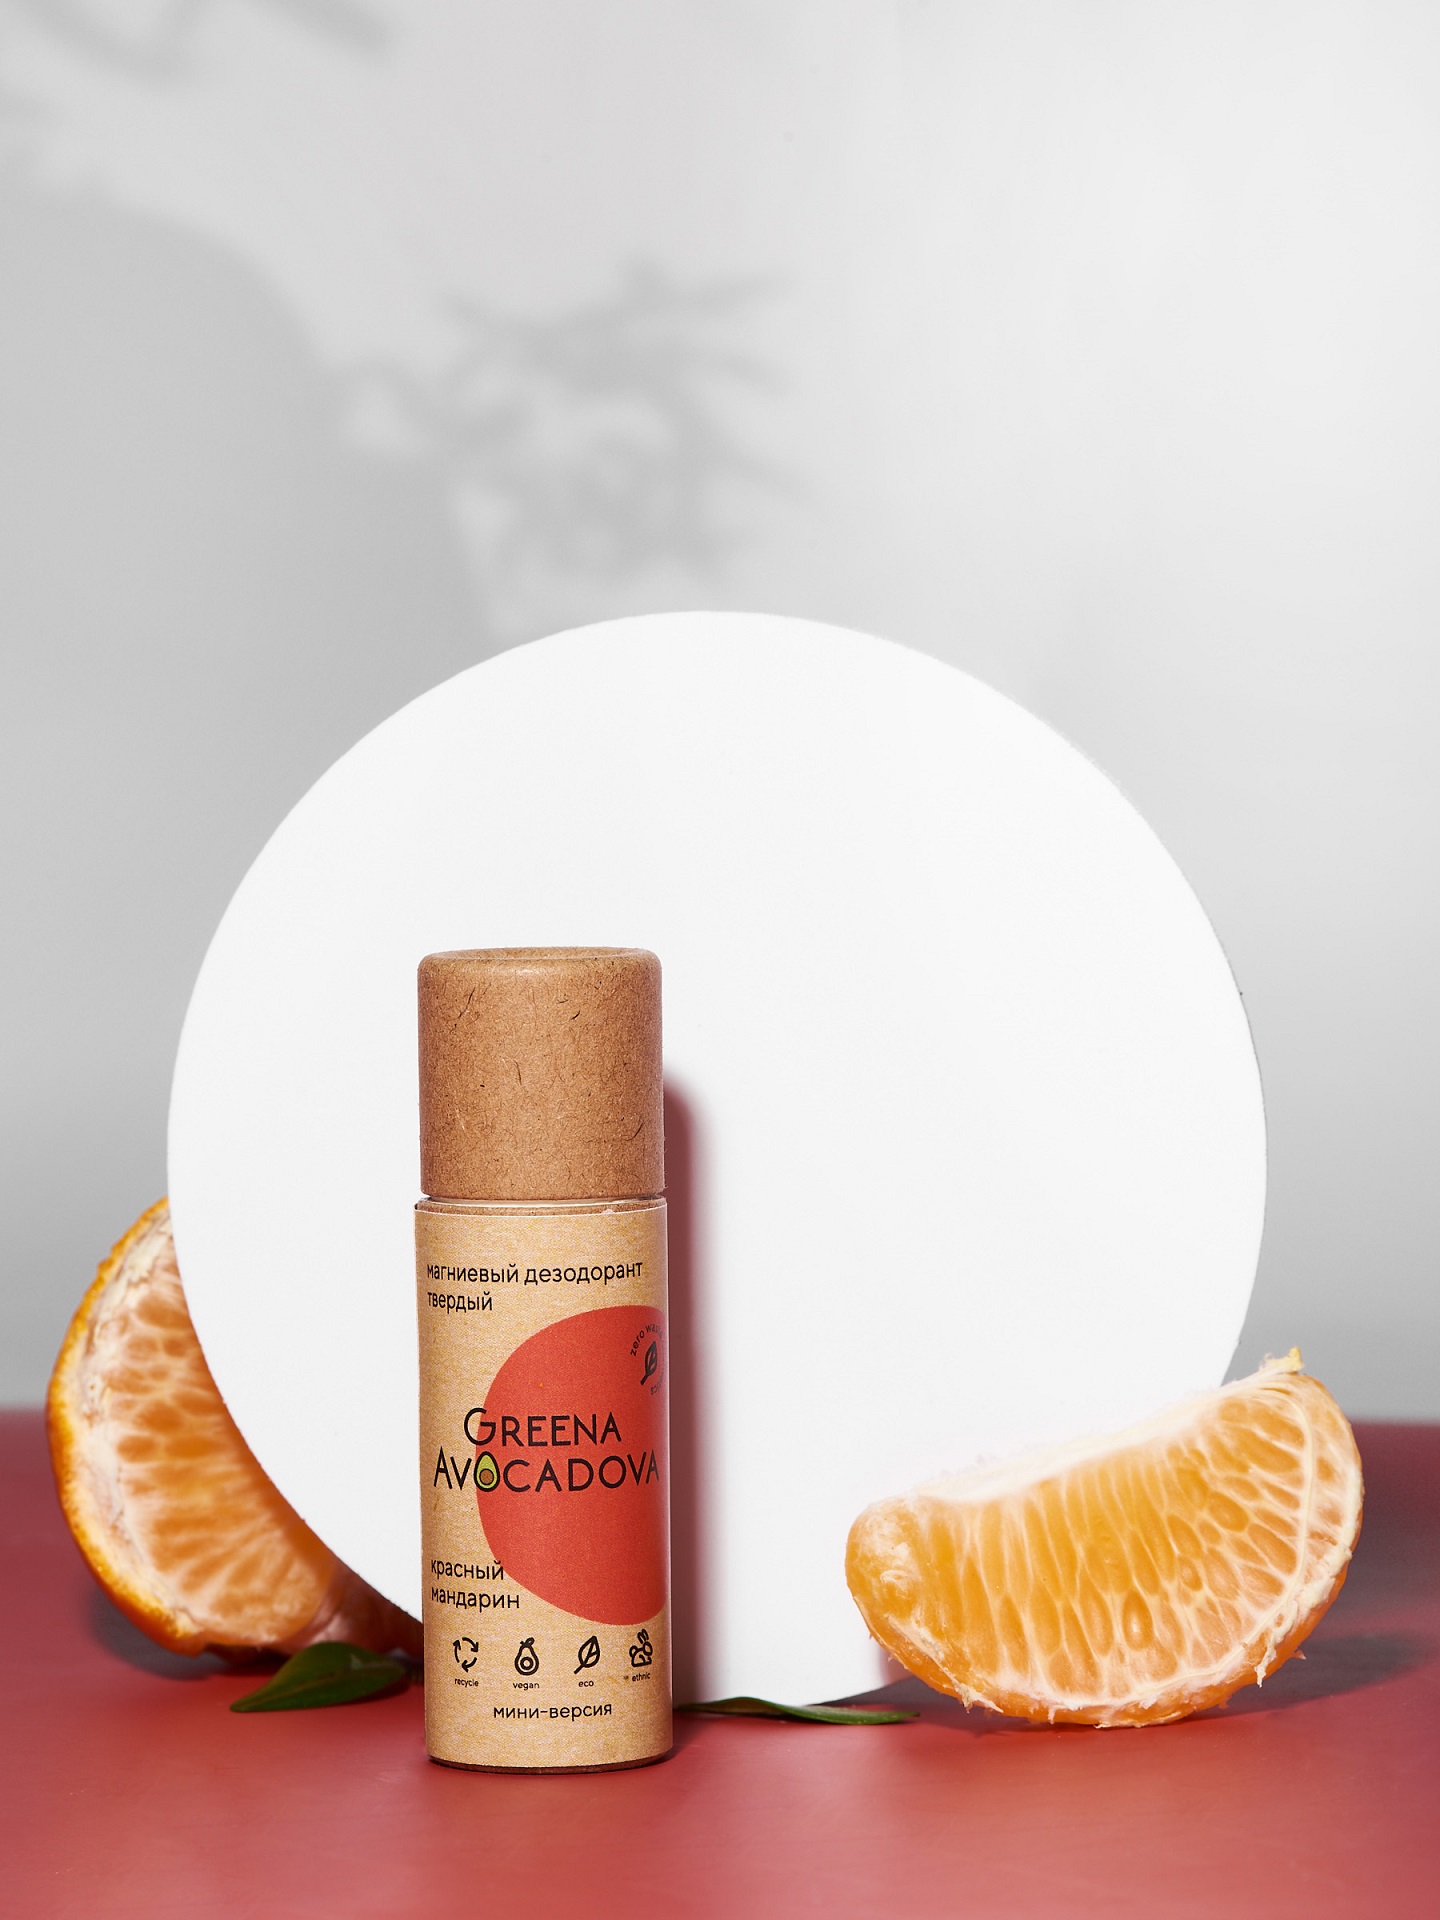 Натуральный твердый дезодорант Greena Avocadova Красный мандарин мини-версия - фото 3